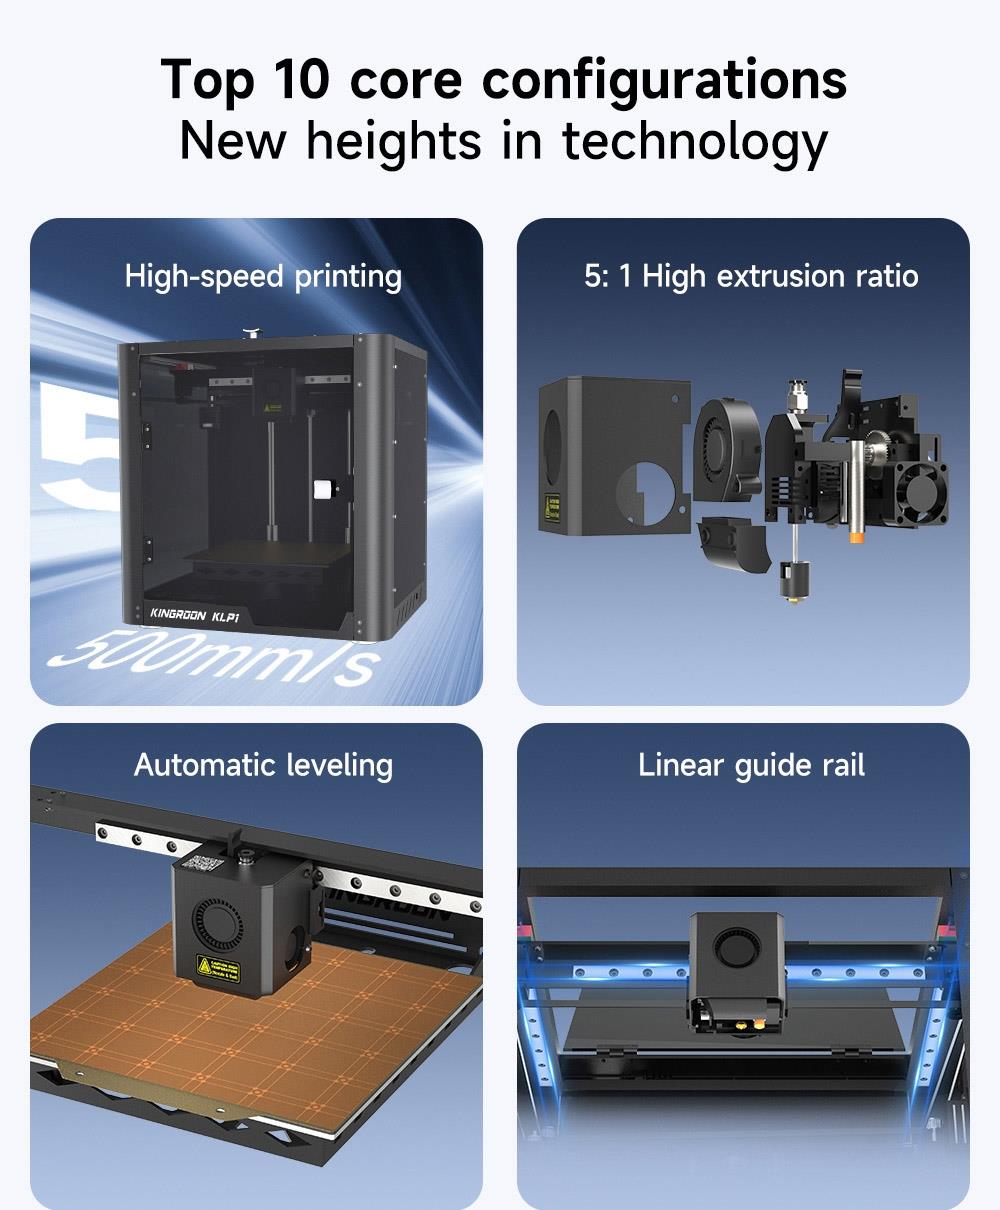 KINGROON KLP1 3D Printer, Automatisch waterpas, 0,05-0,3mm afdruknauwkeurigheid, 500mm/s afdruksnelheid, Klipper Firmware